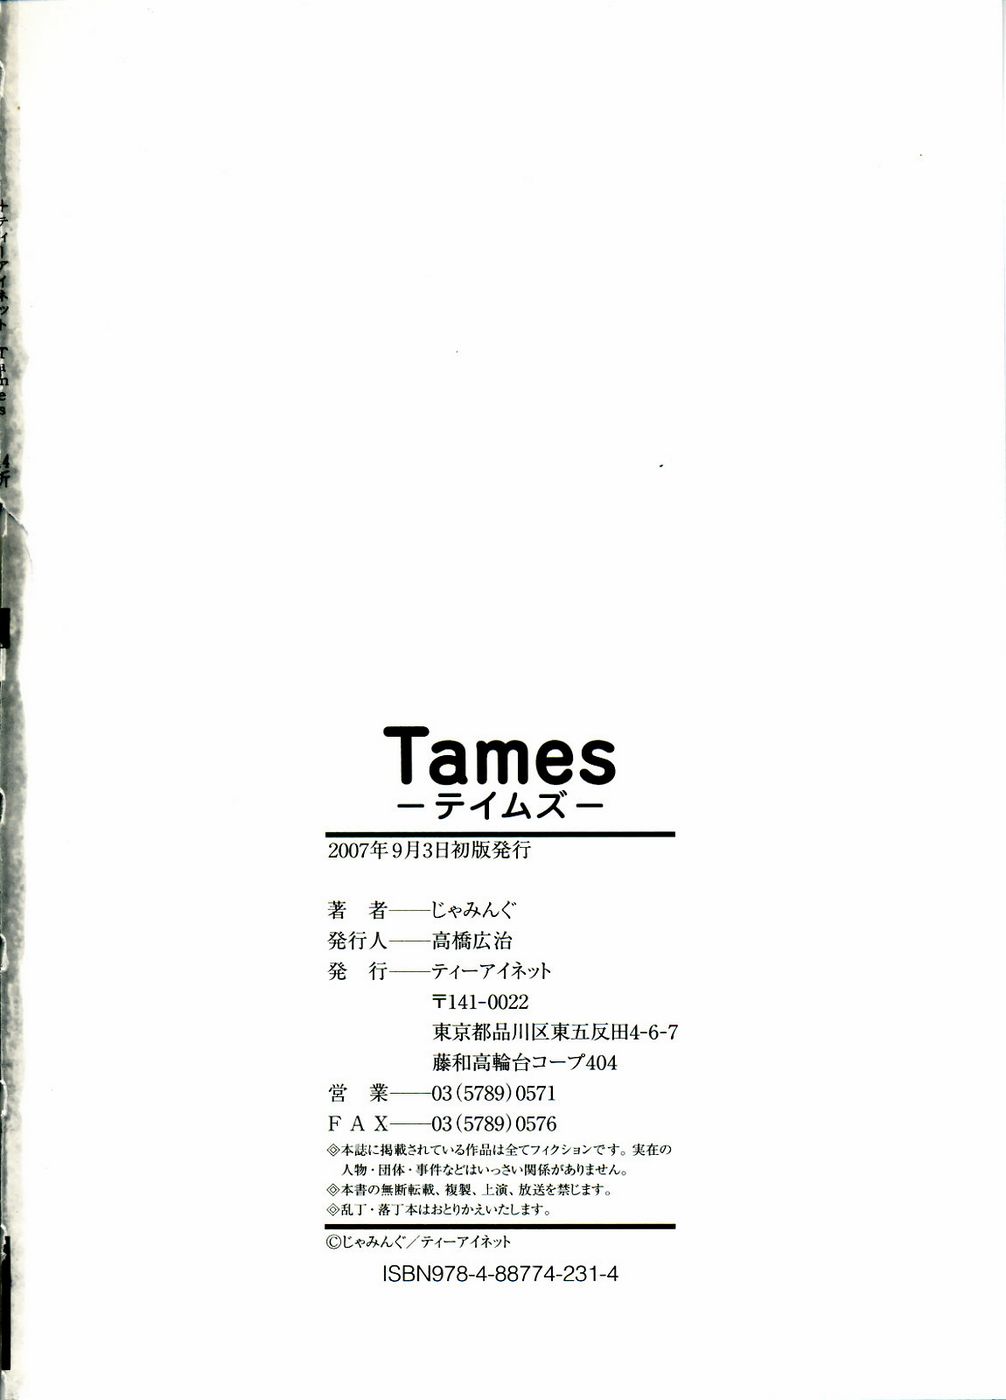 [JAMMING] Tames 